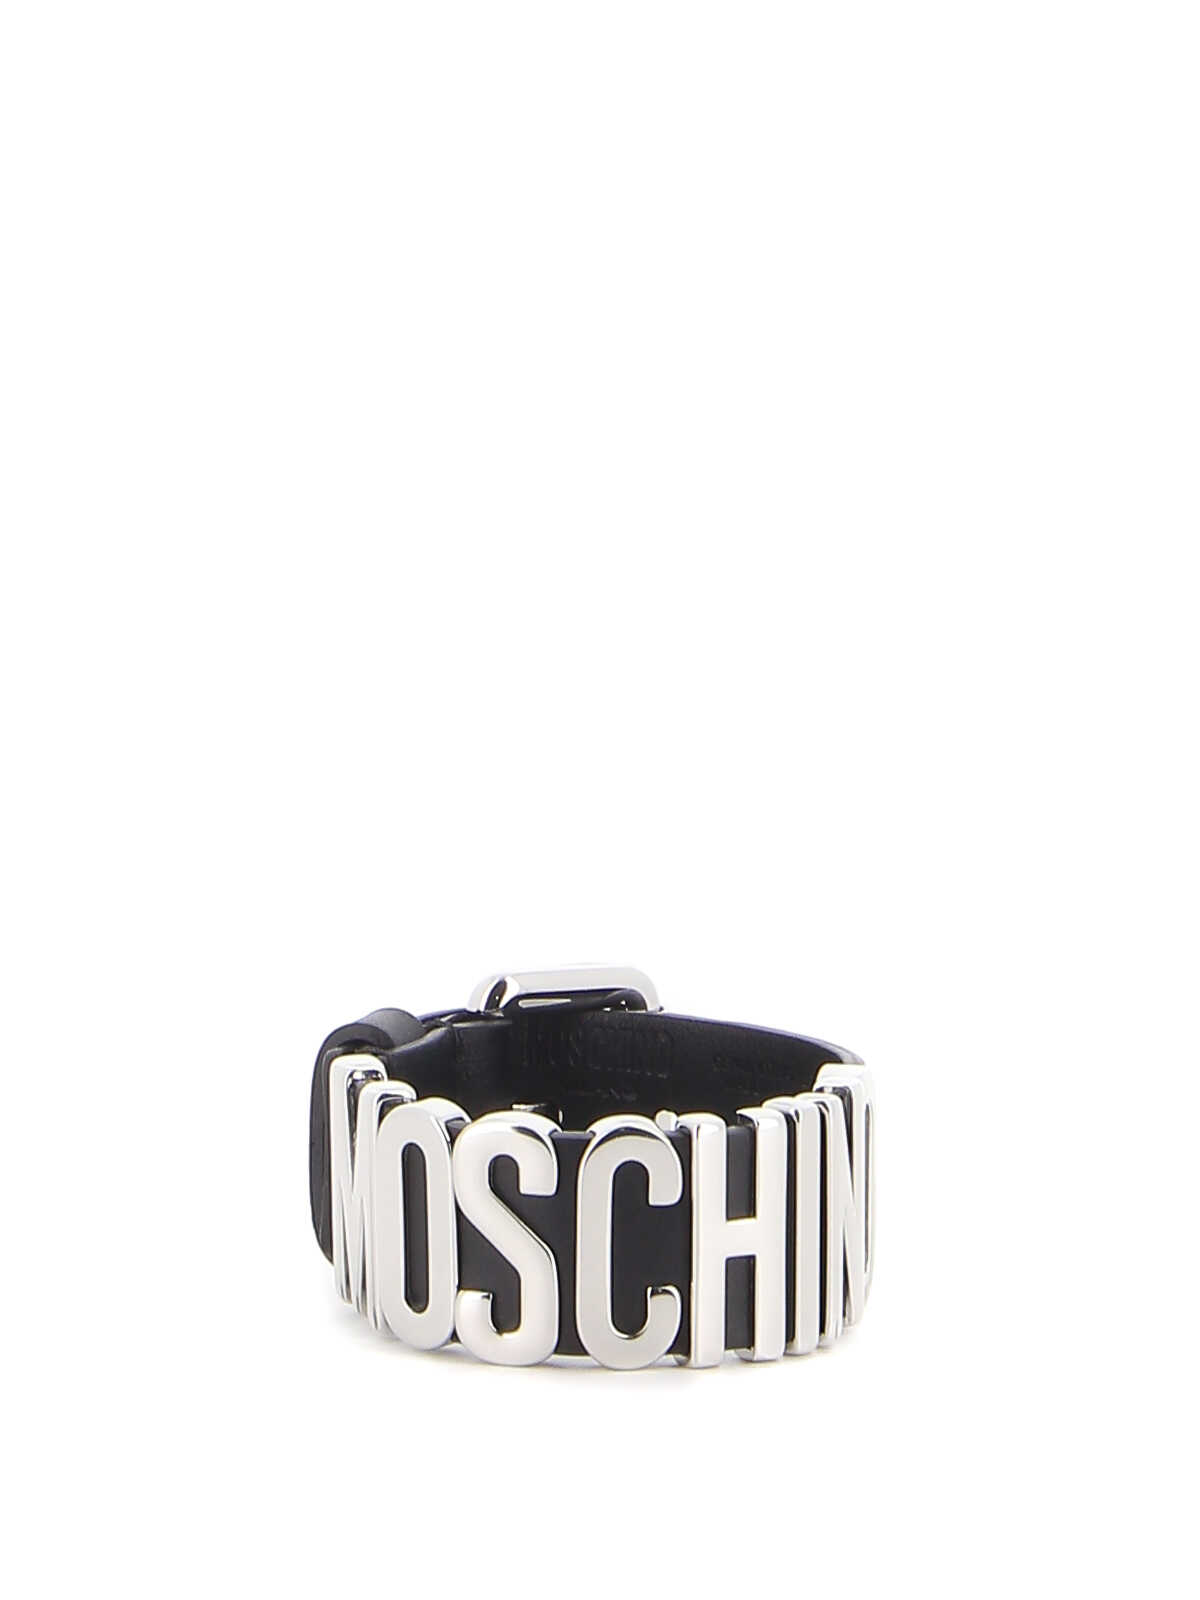 Moschino Metallic Letters Leather Bracelet NERO ARGENTO image